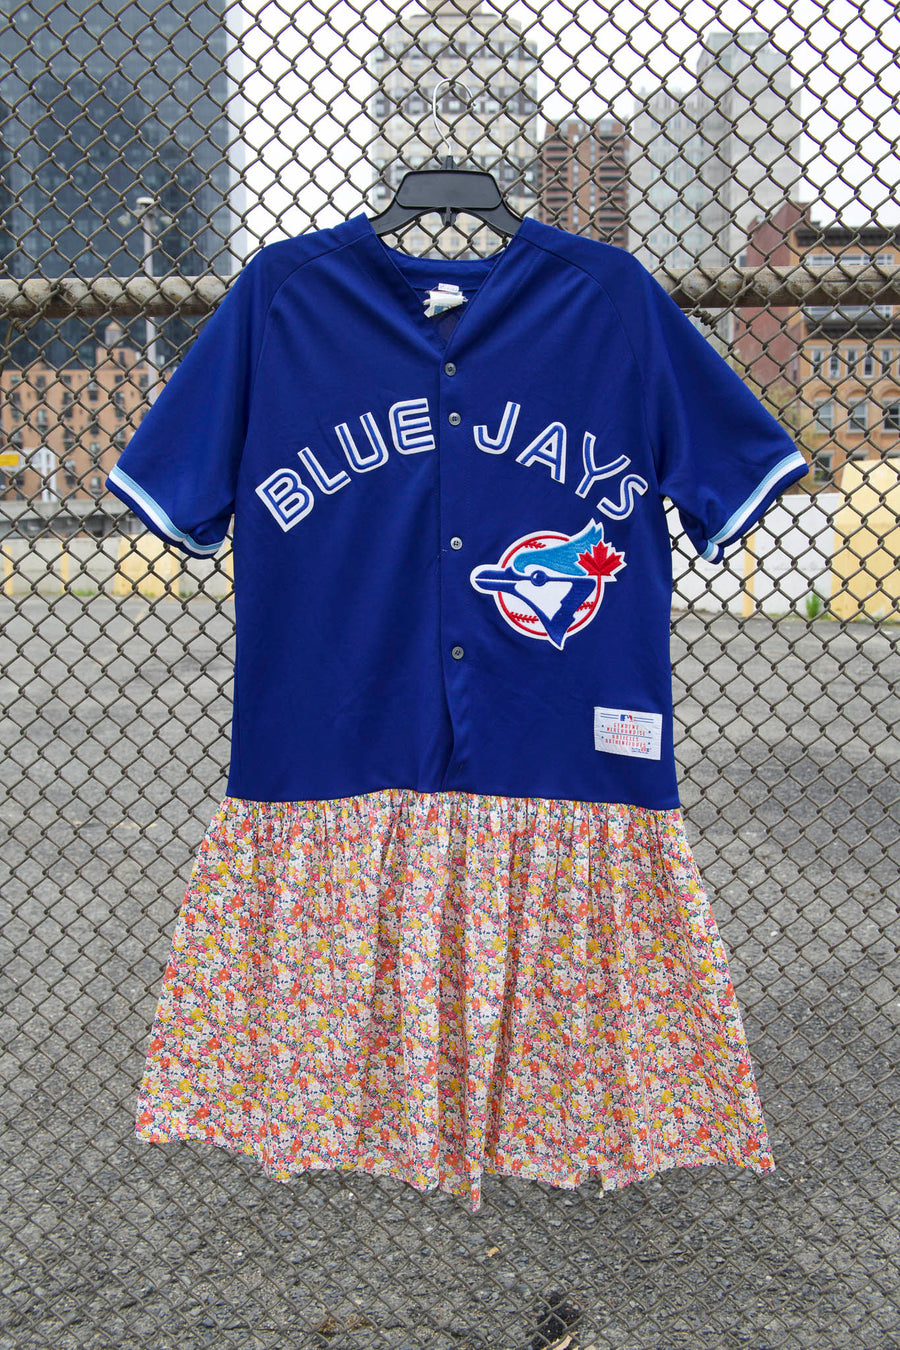 BATSHEVA - One-of-a-Kind Blue Jays Jersey Dress